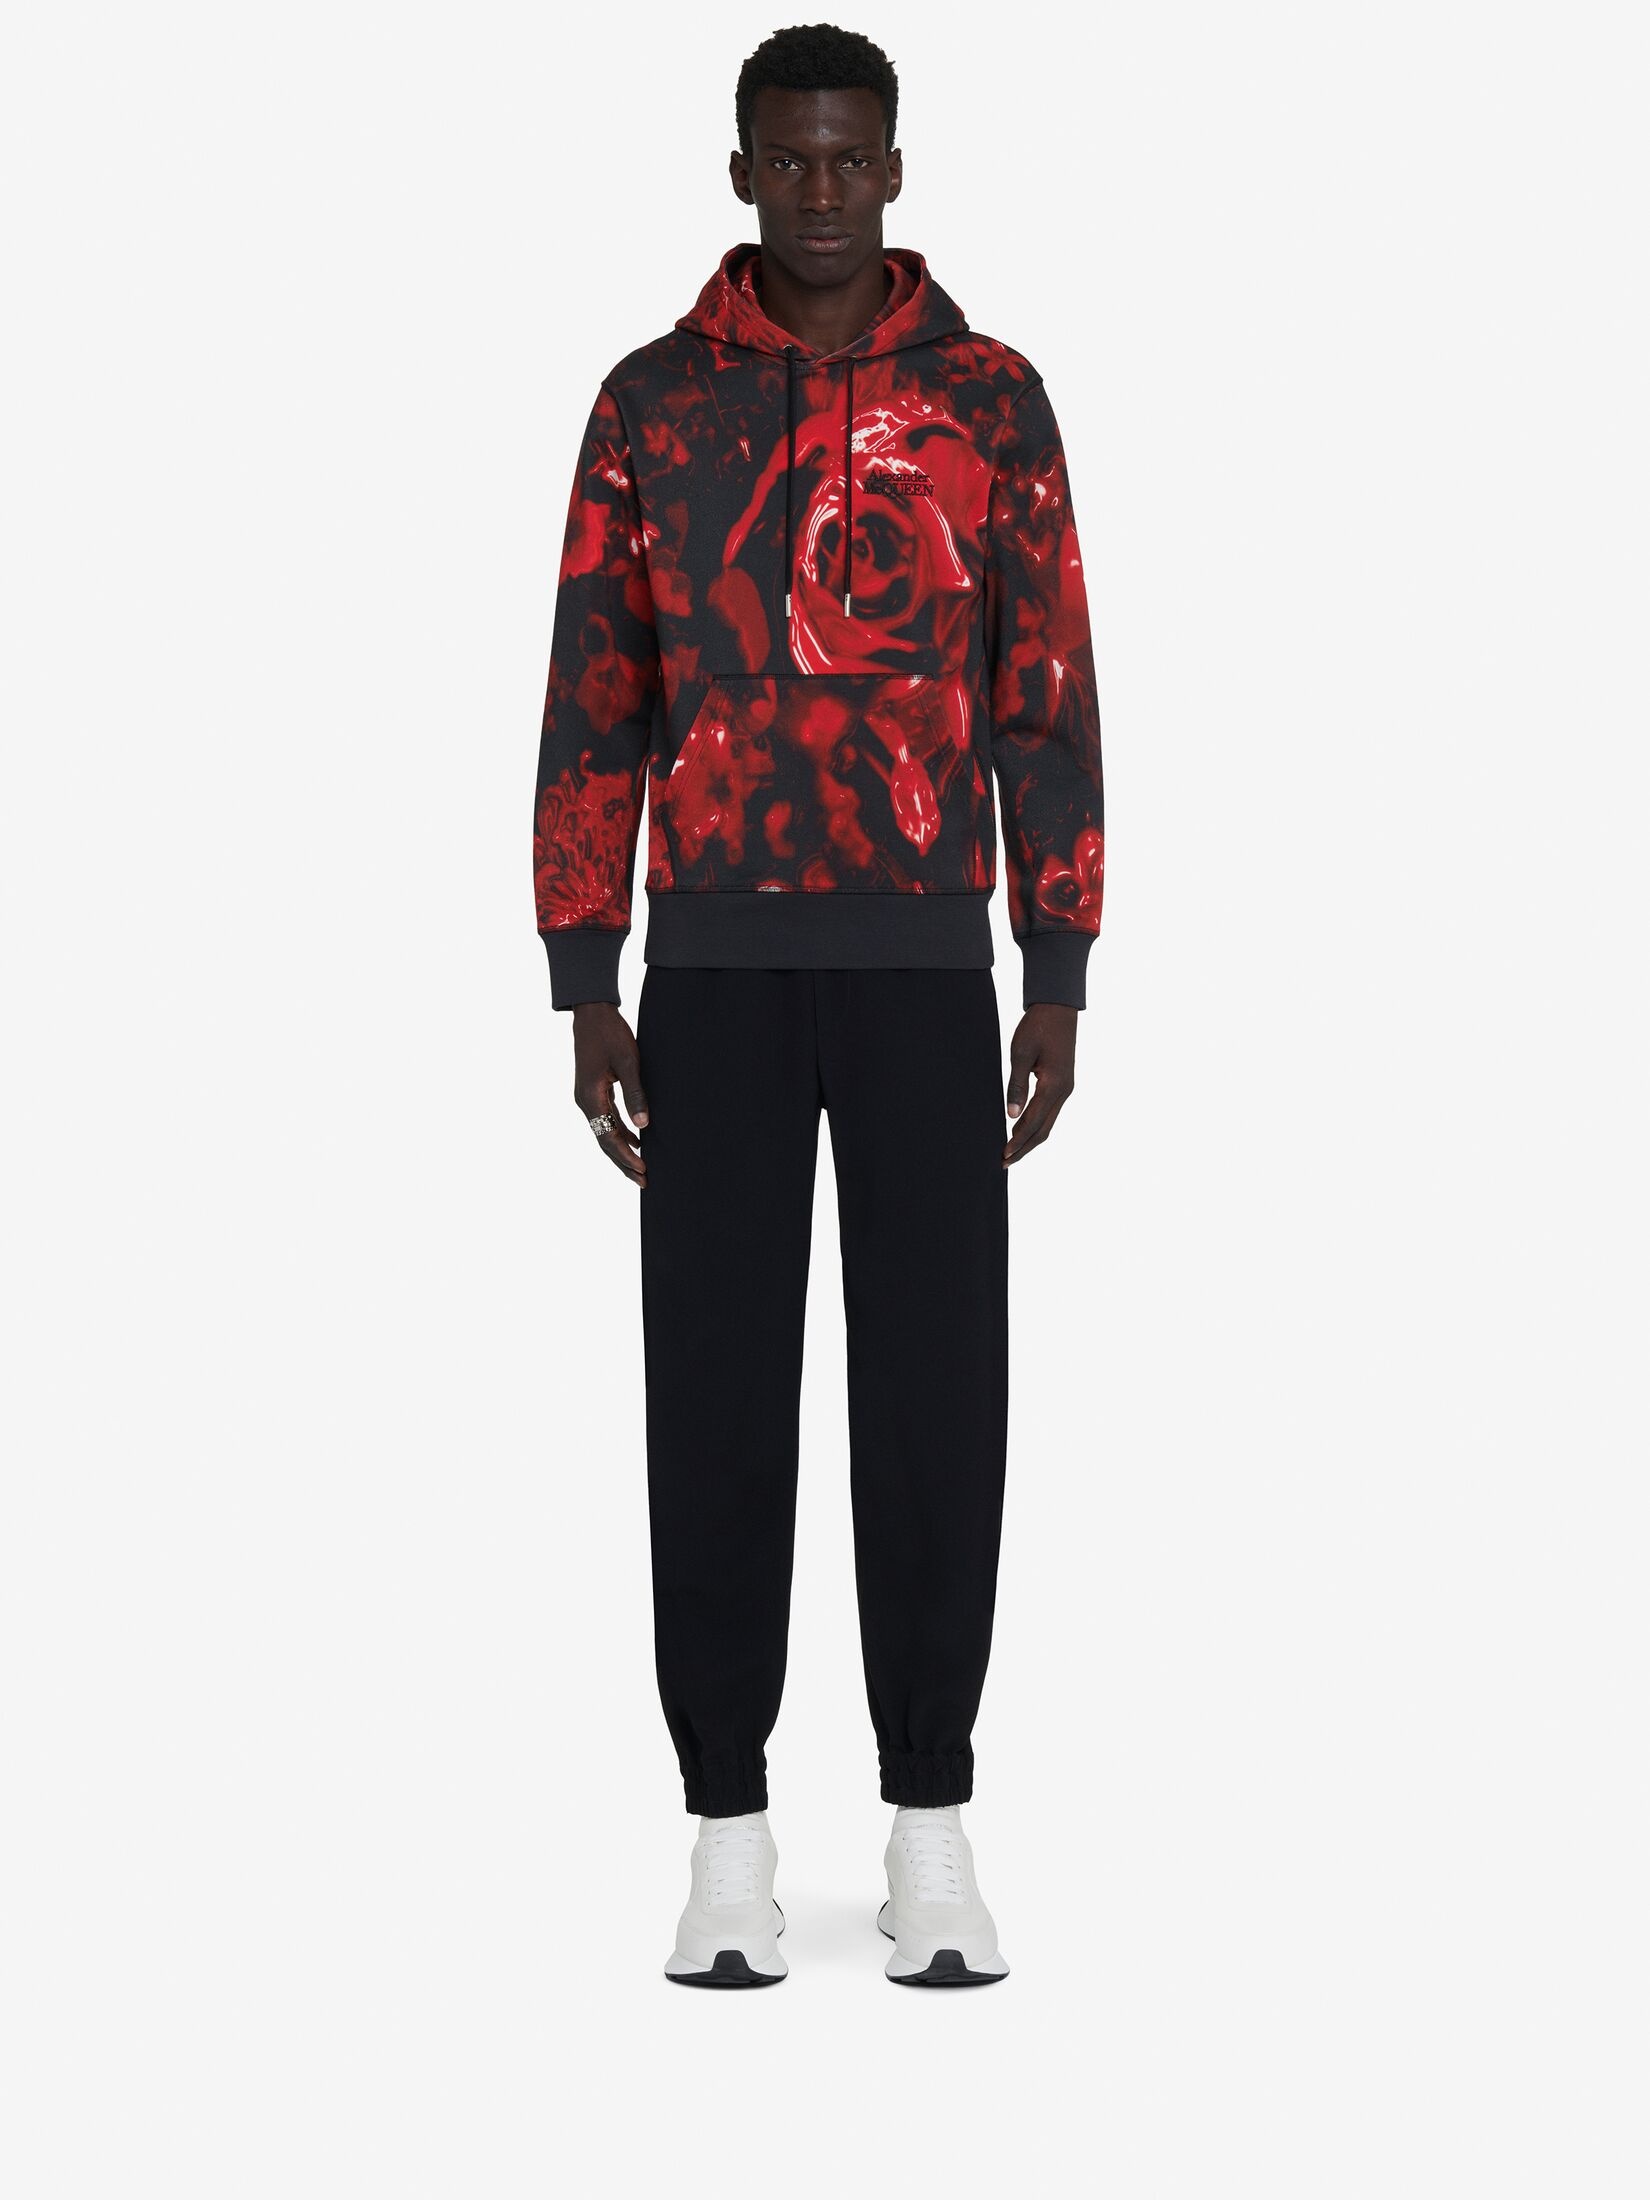 Men's Wax Flower Hooded Sweatshirt in Black/red - 2